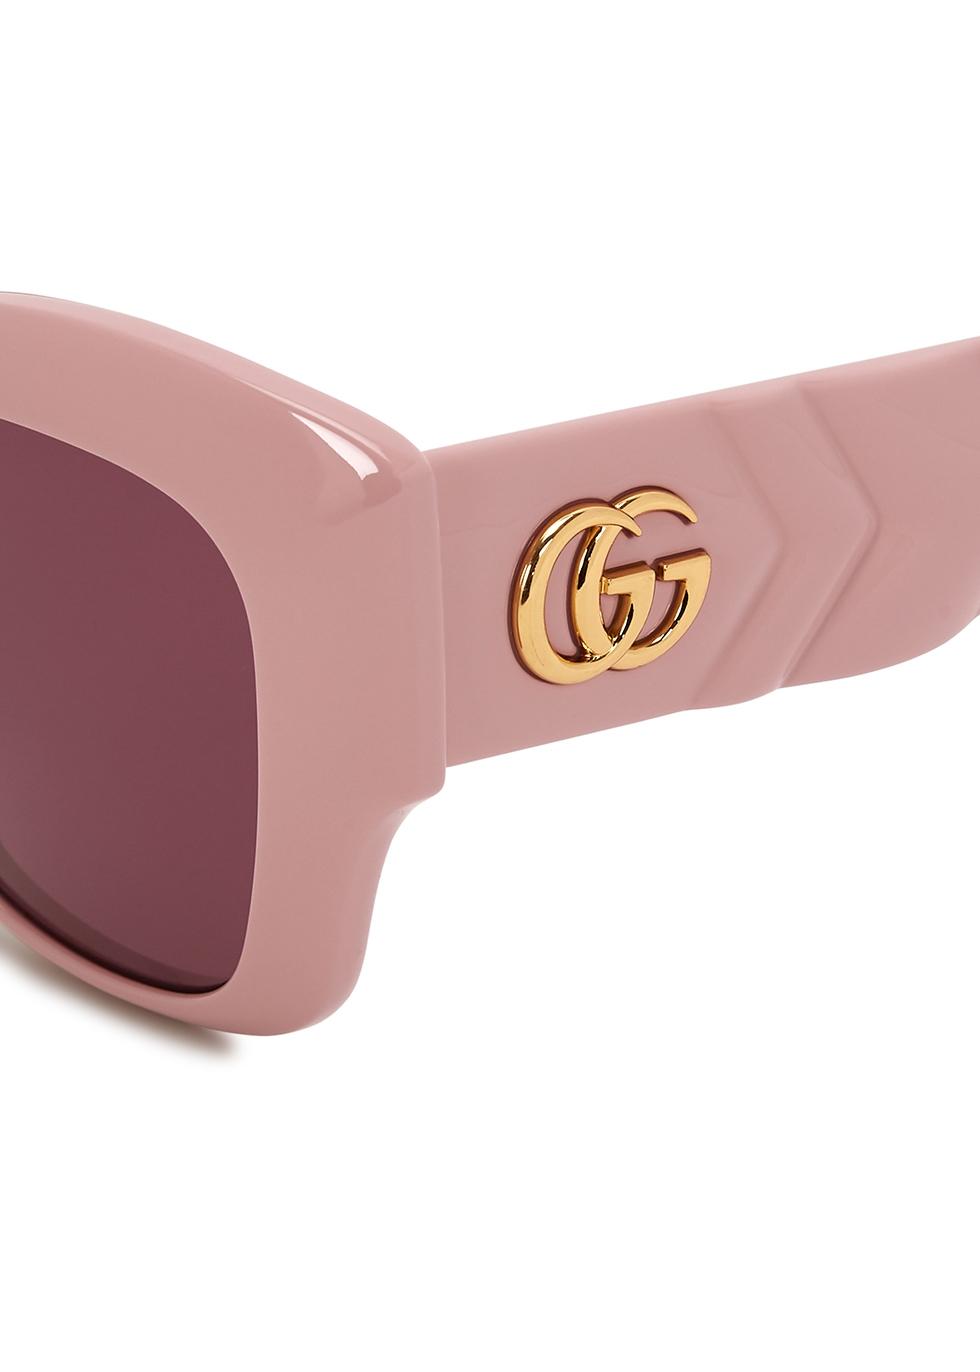 pink oversized gucci sunglasses